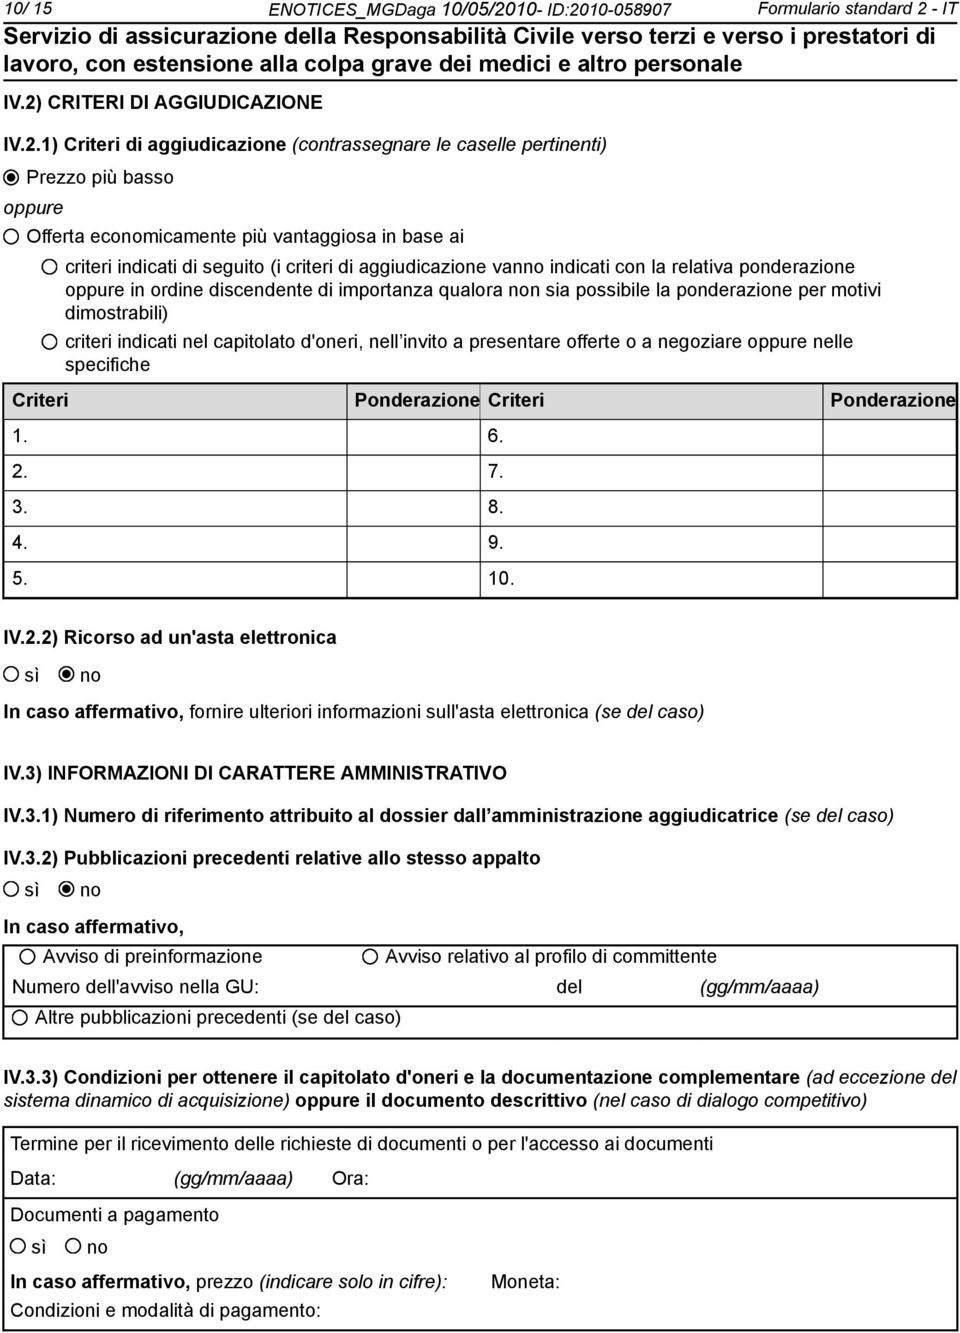 10-058907 Formulario standard 2 